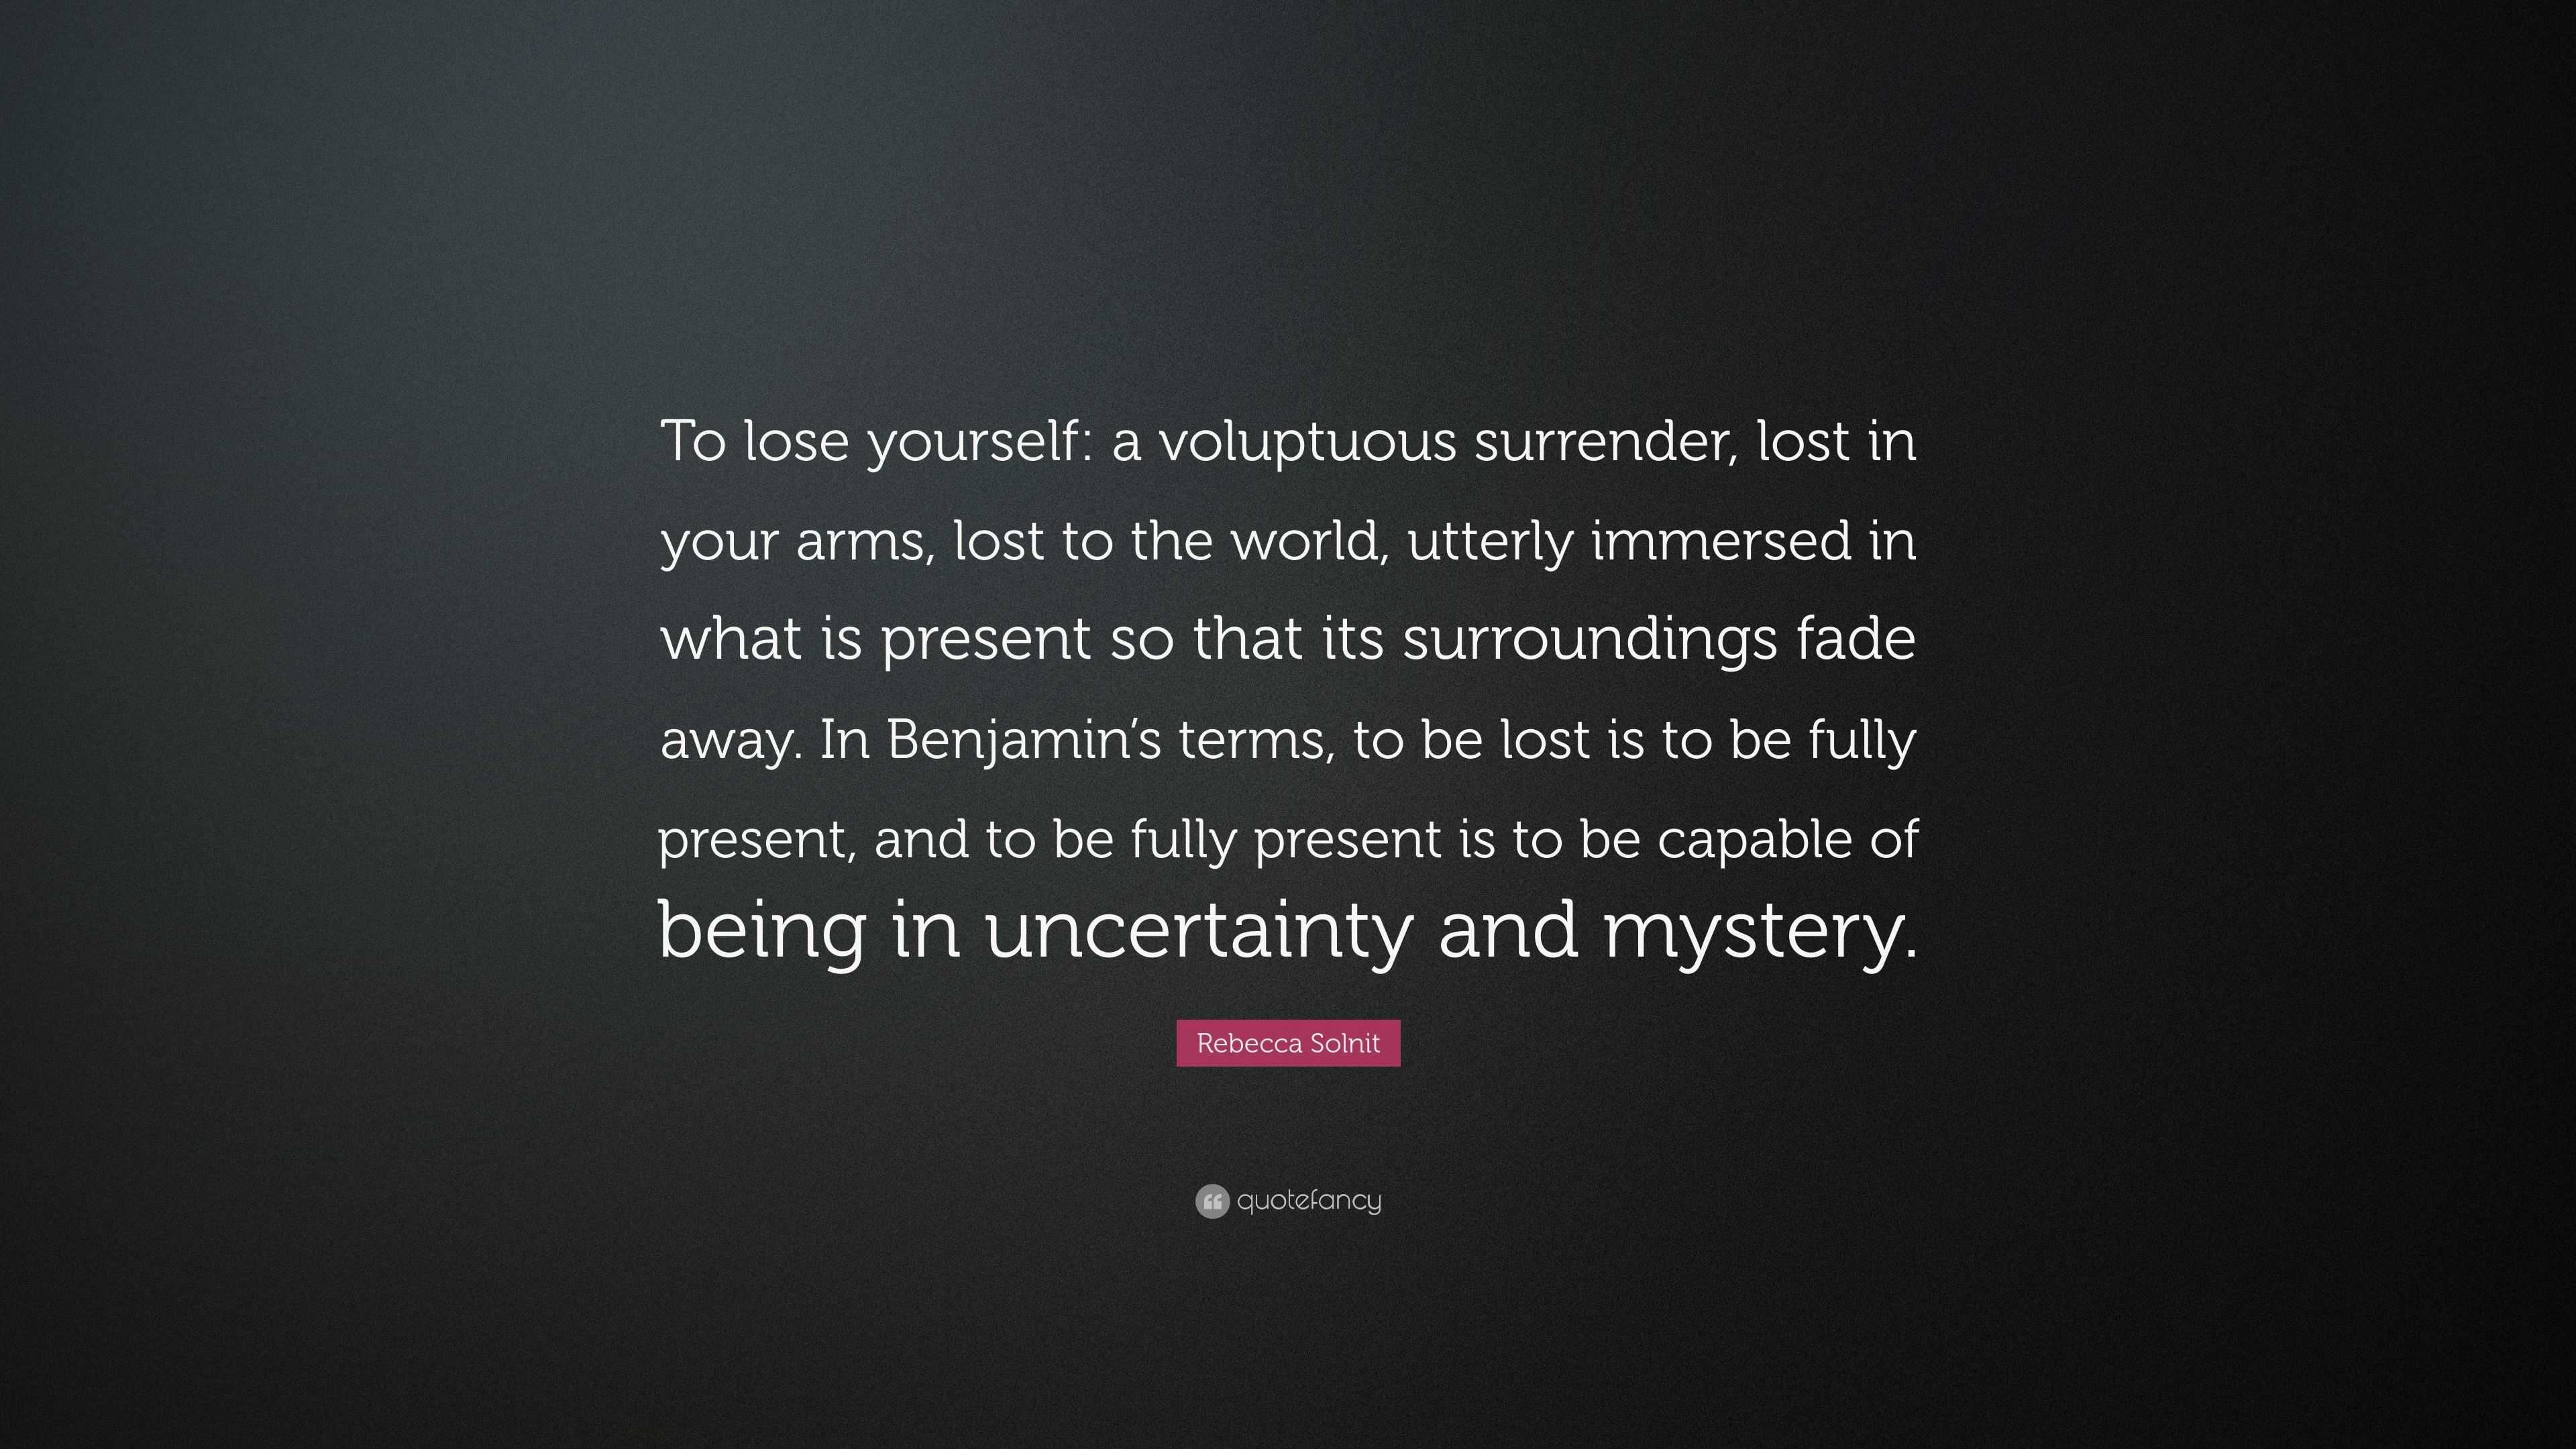 Rebecca Solnit Quote: “To lose yourself: a voluptuous surrender, lost ...